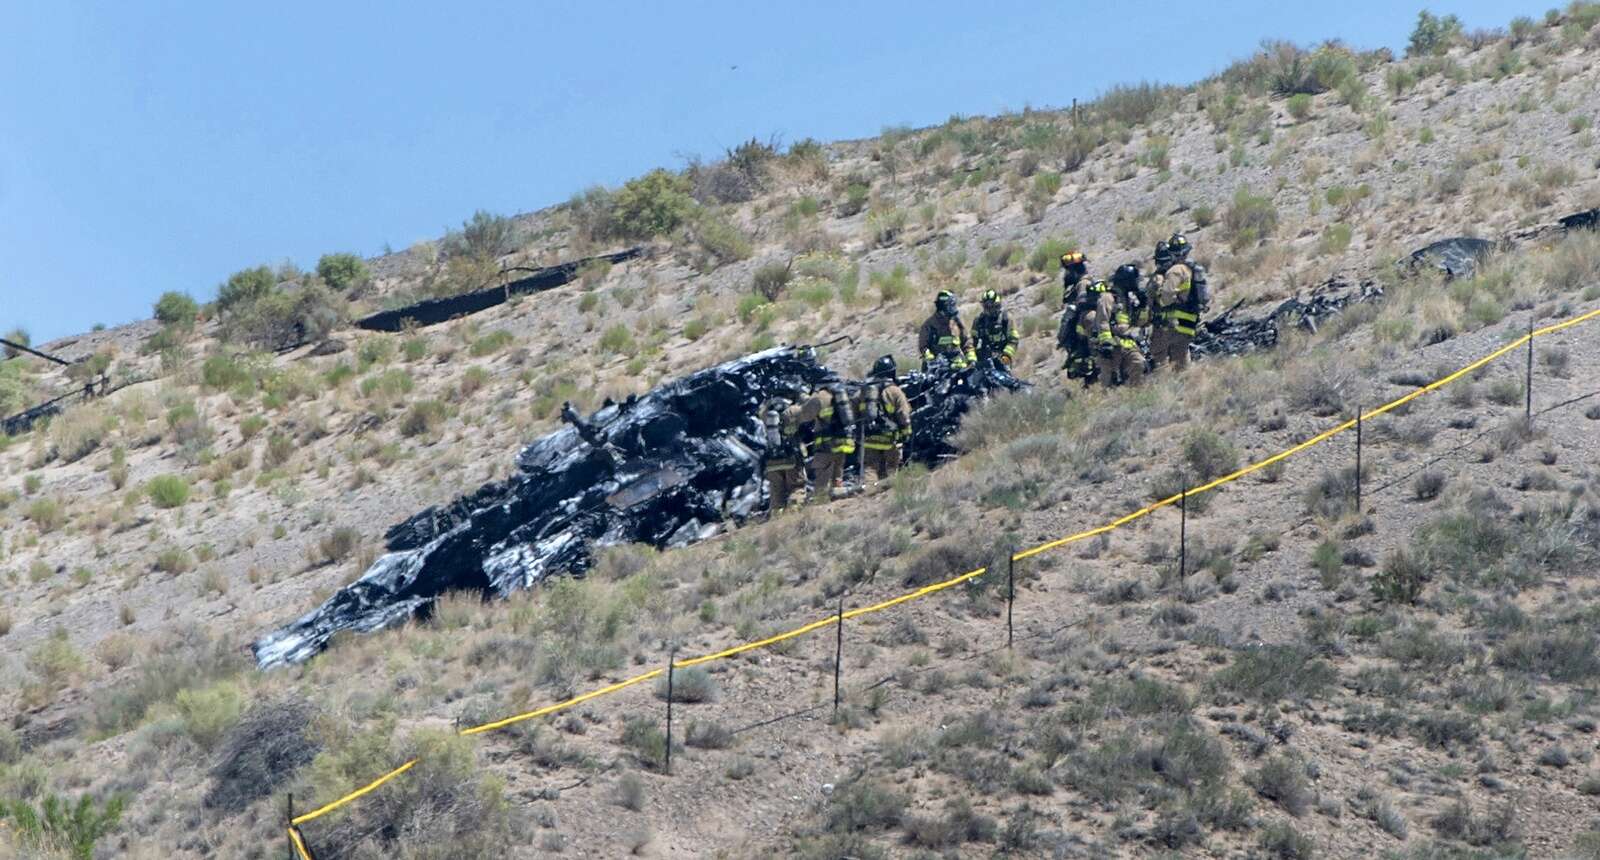 Daring Mid-Air Escape: Pilot Survives After Military Jet Crashes Near Albuquerque Airport